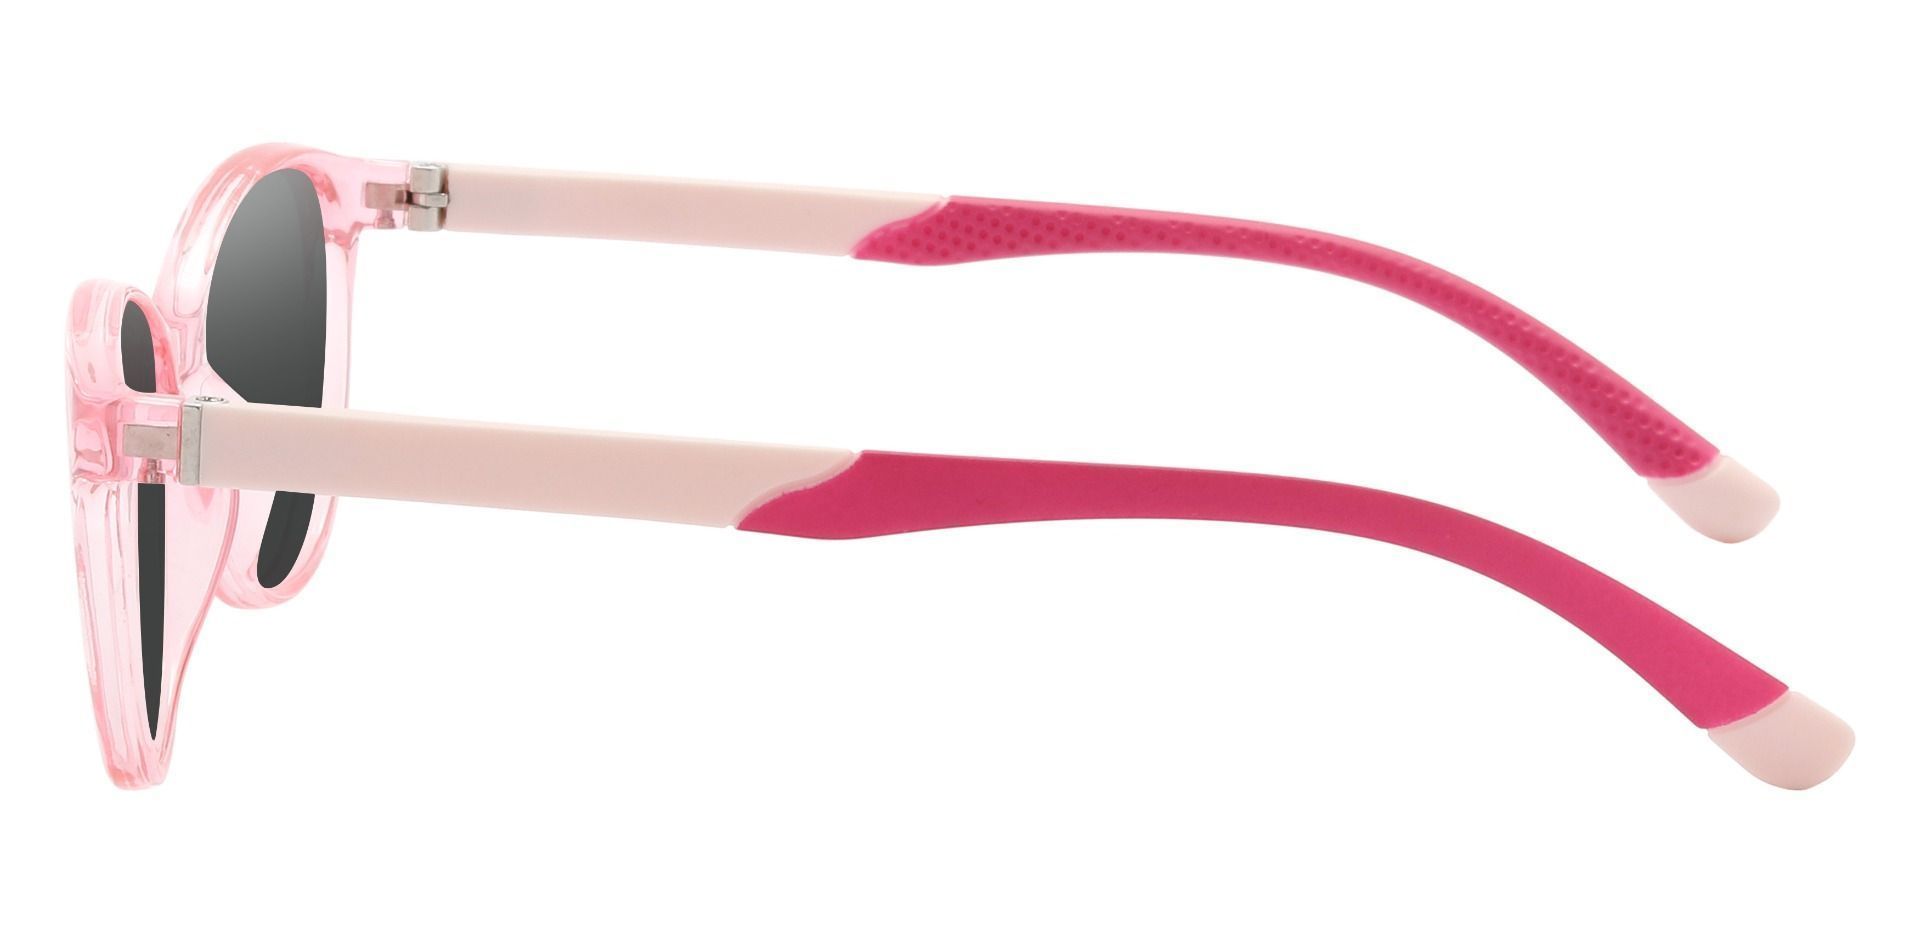 Mildred Cat Eye Prescription Sunglasses - Pink Frame With Gray Lenses